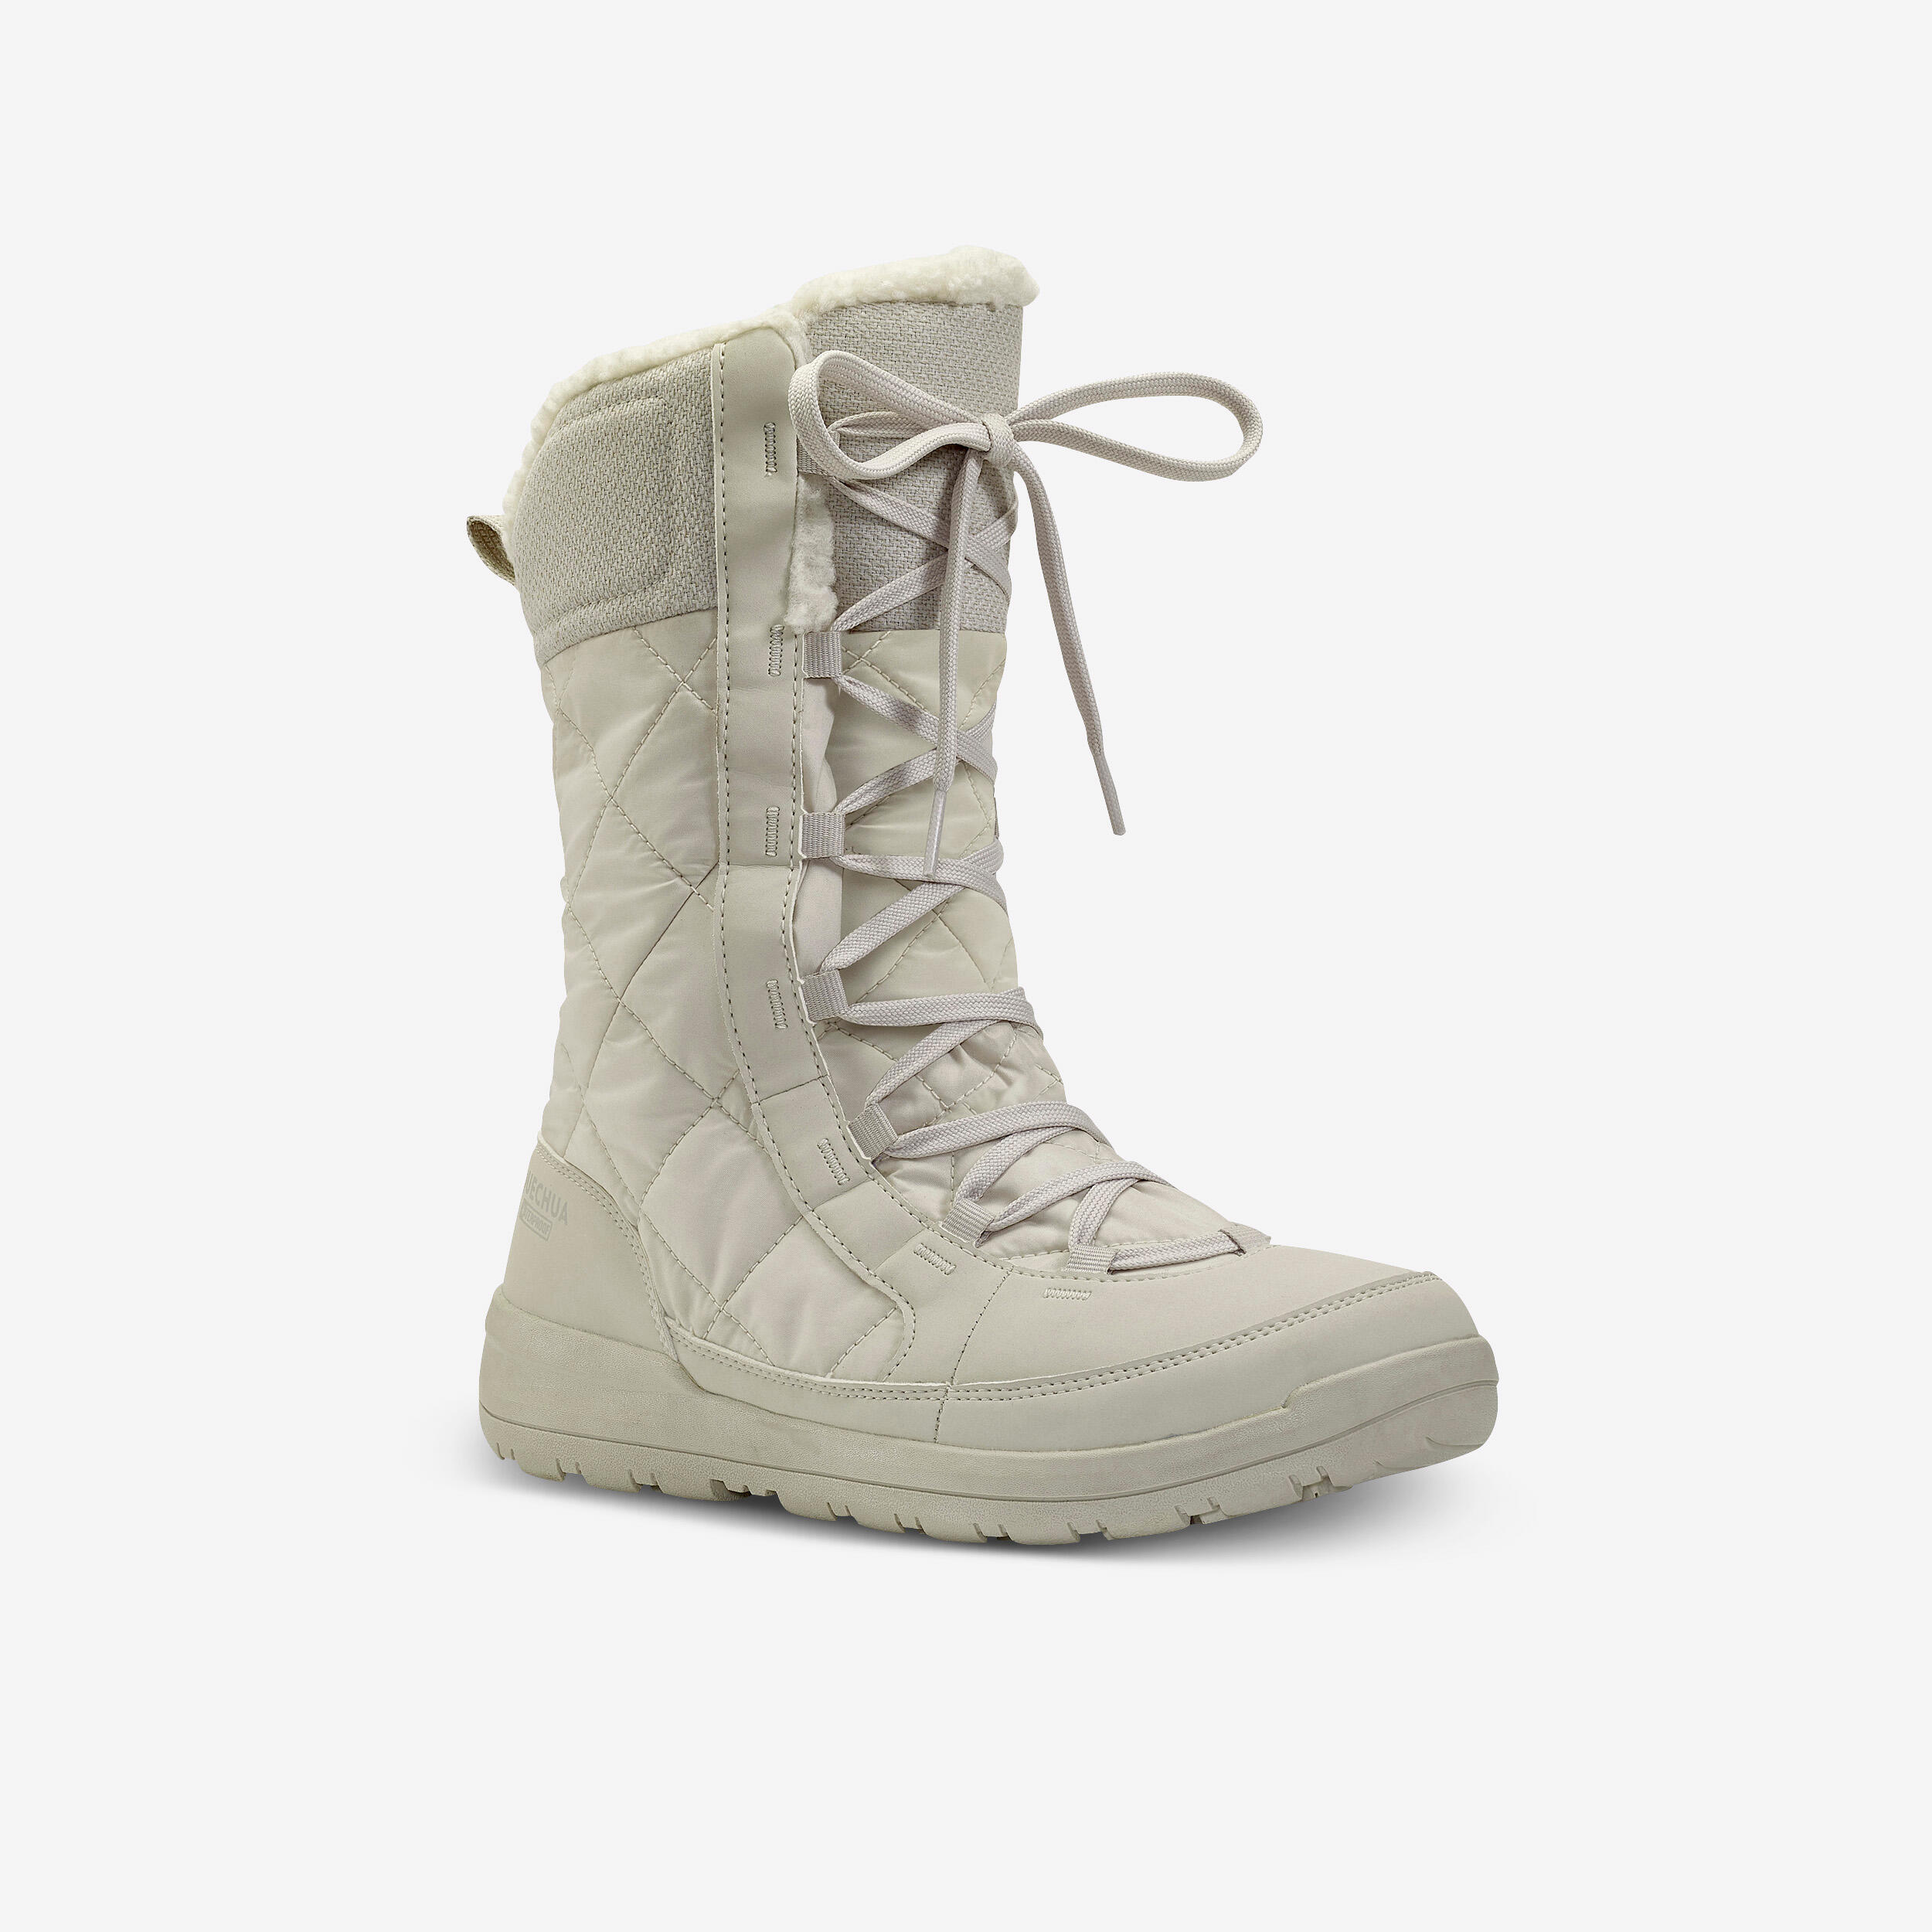 QUECHUA Women's warm waterproof snow boots - SH500 high - lace-up 